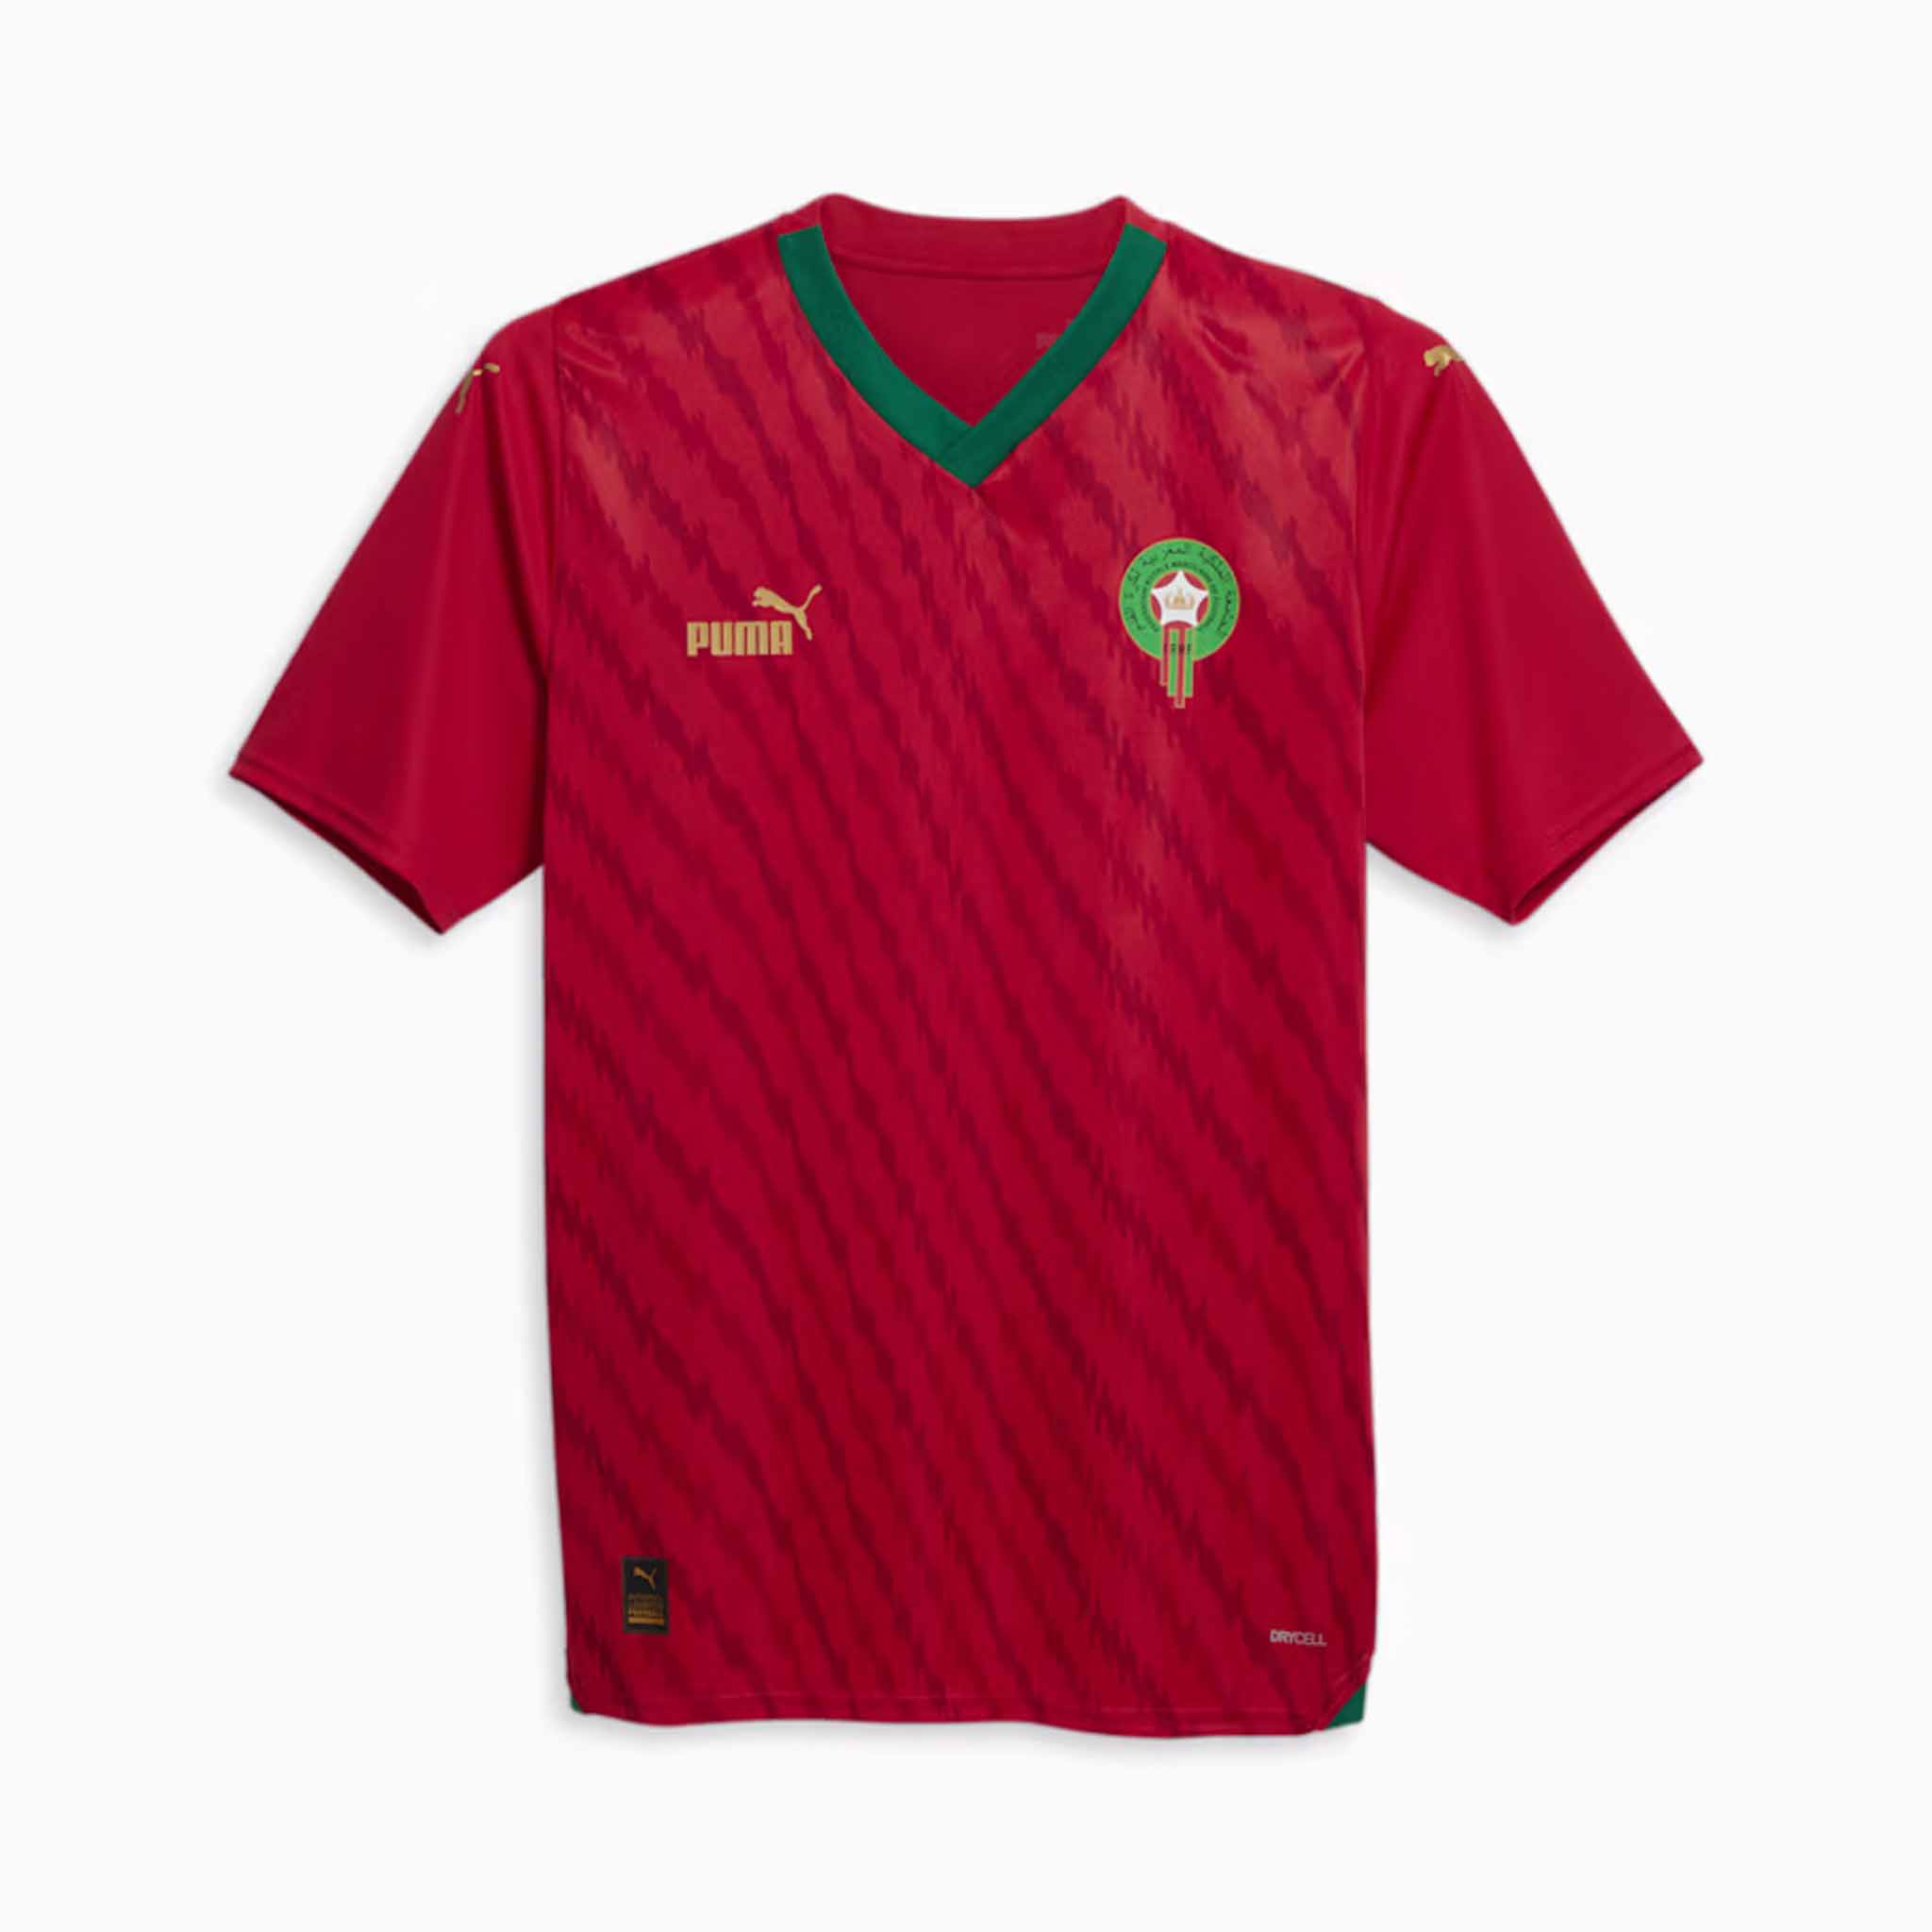 Puma Morocco RMFF WWC home soccer jersey - Soccer Sport Fitness